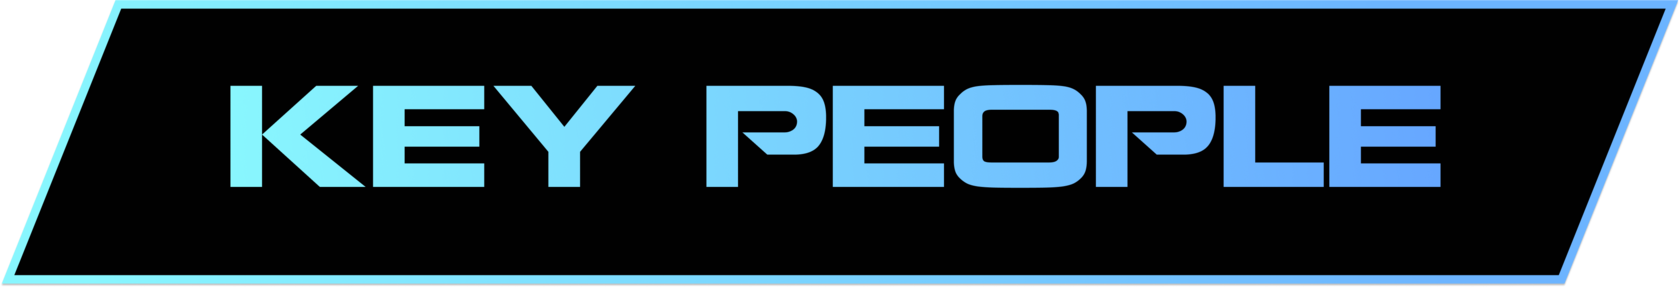 key people logo